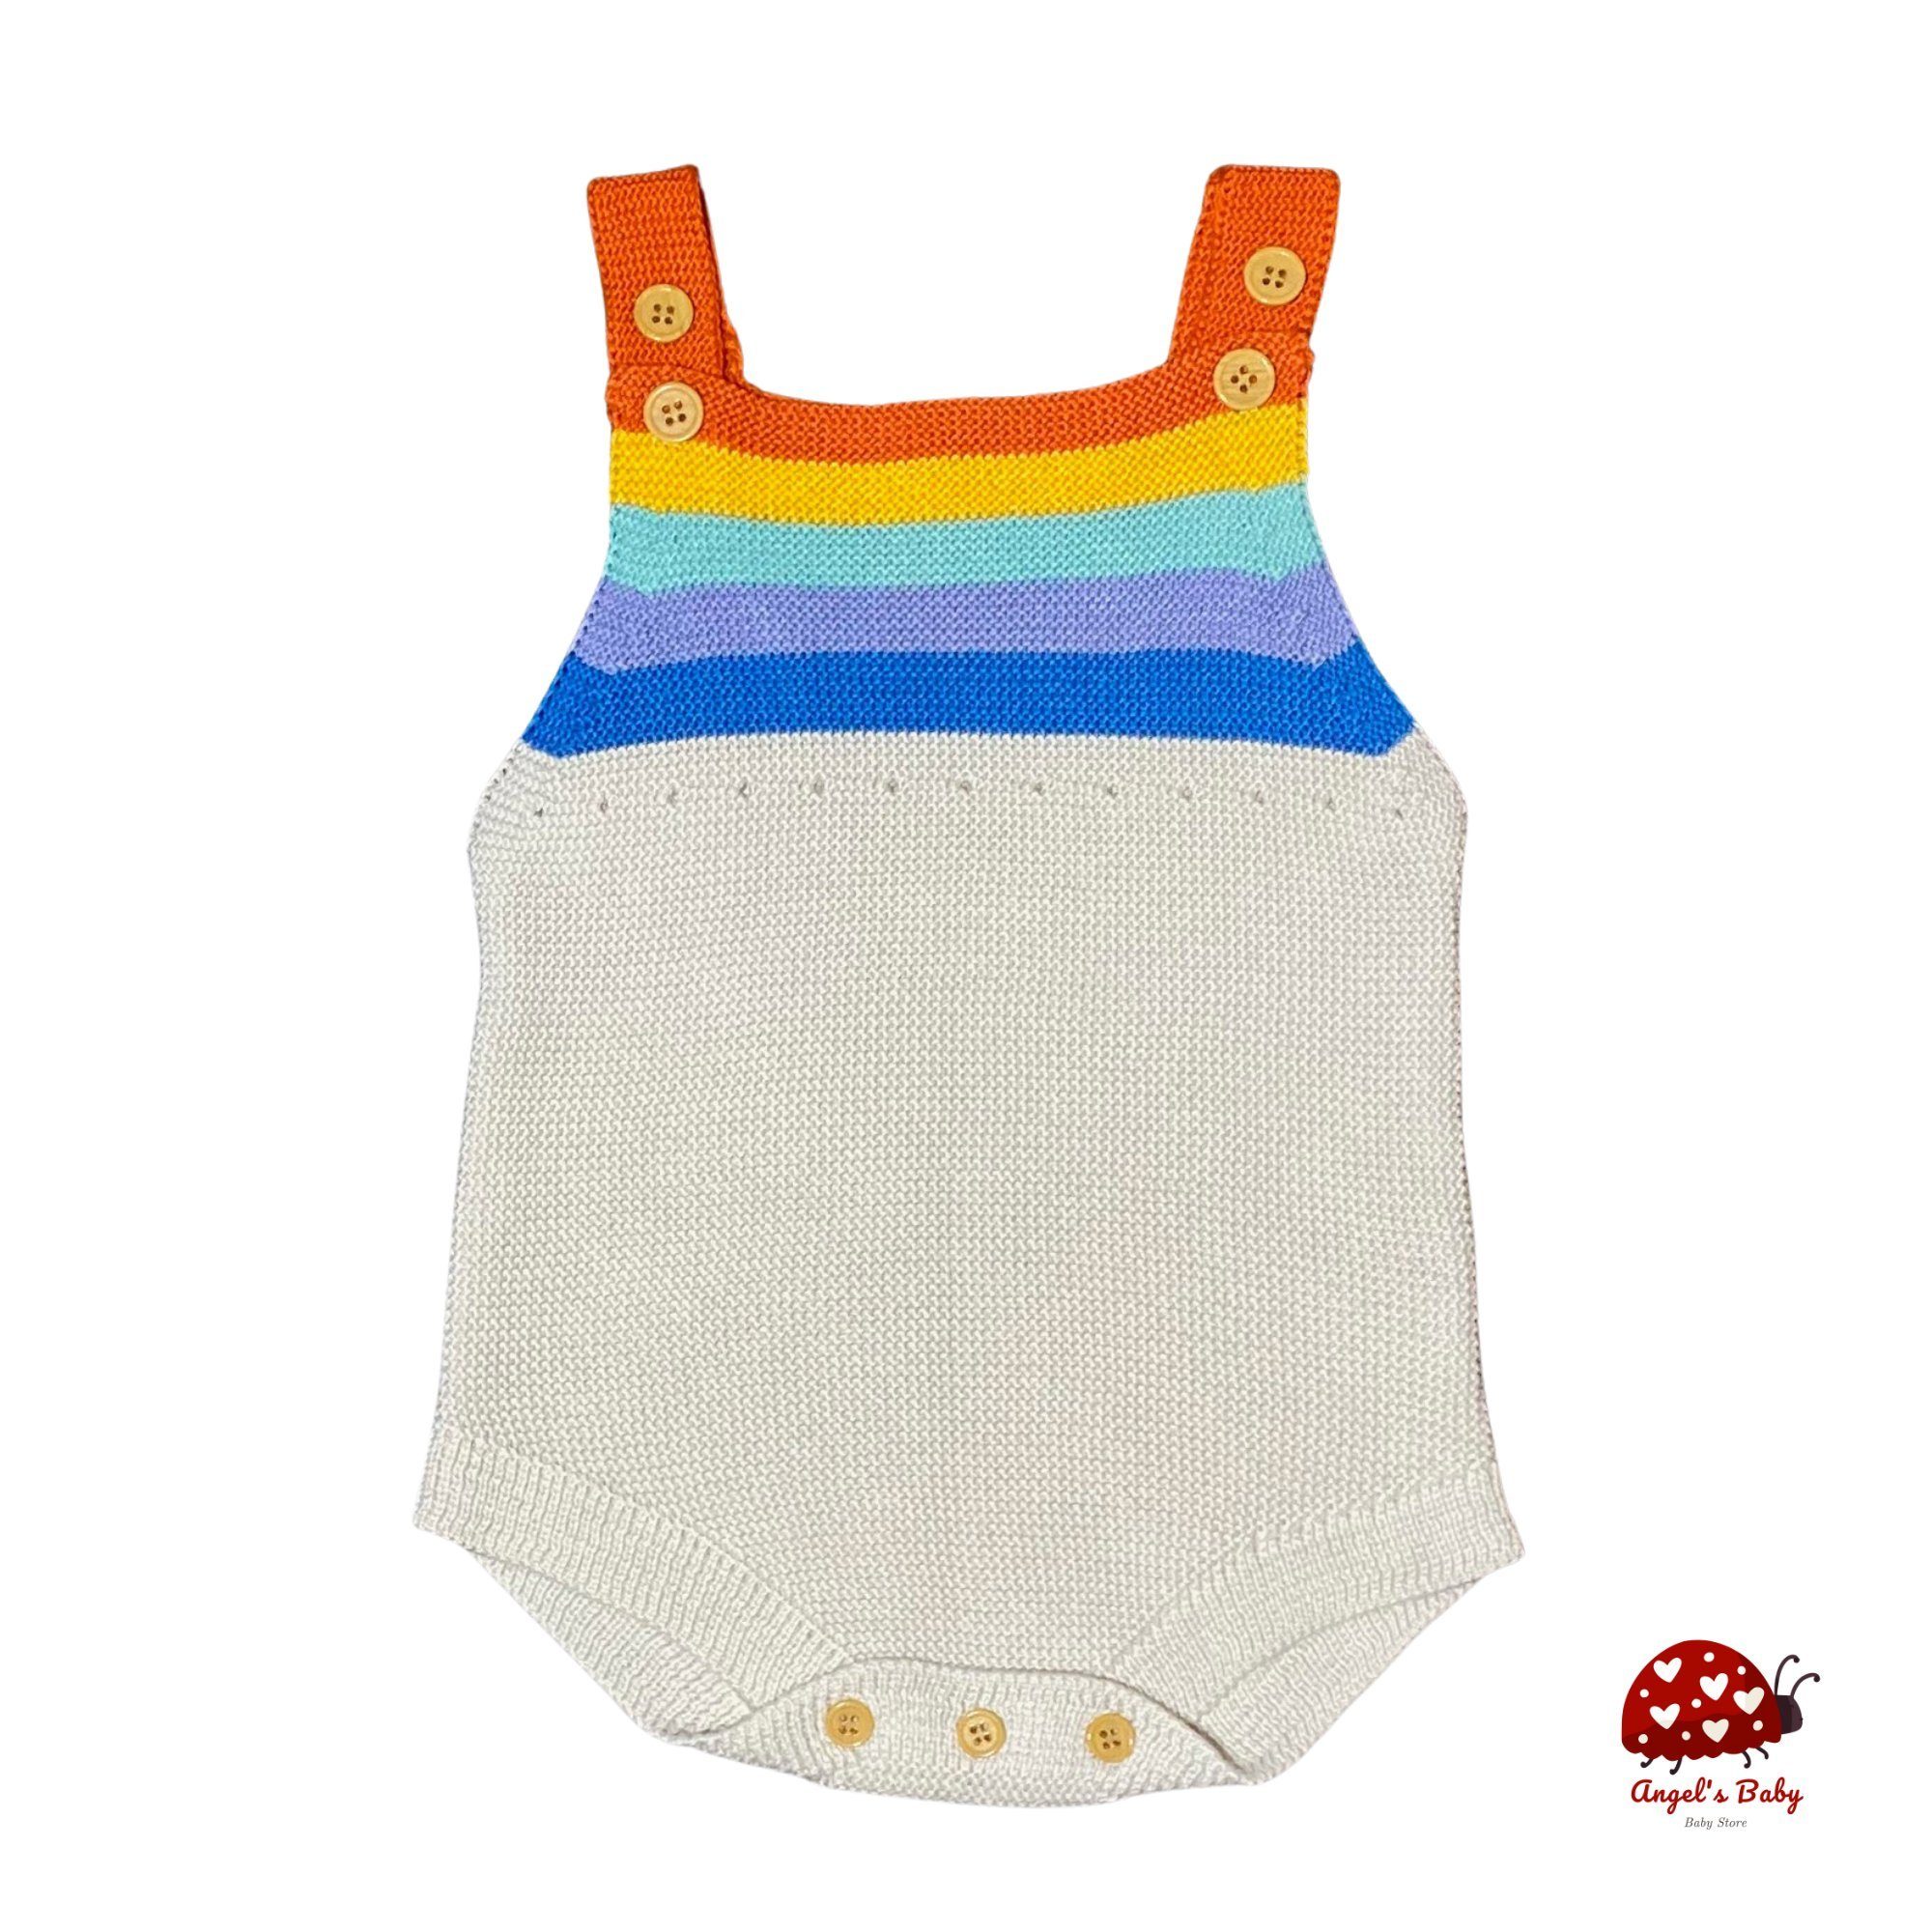 Angel's Baby Strampler Kurzer Baby Jumpsuit in Strick aus Baumwolle in Erdton oder Ecru bunt